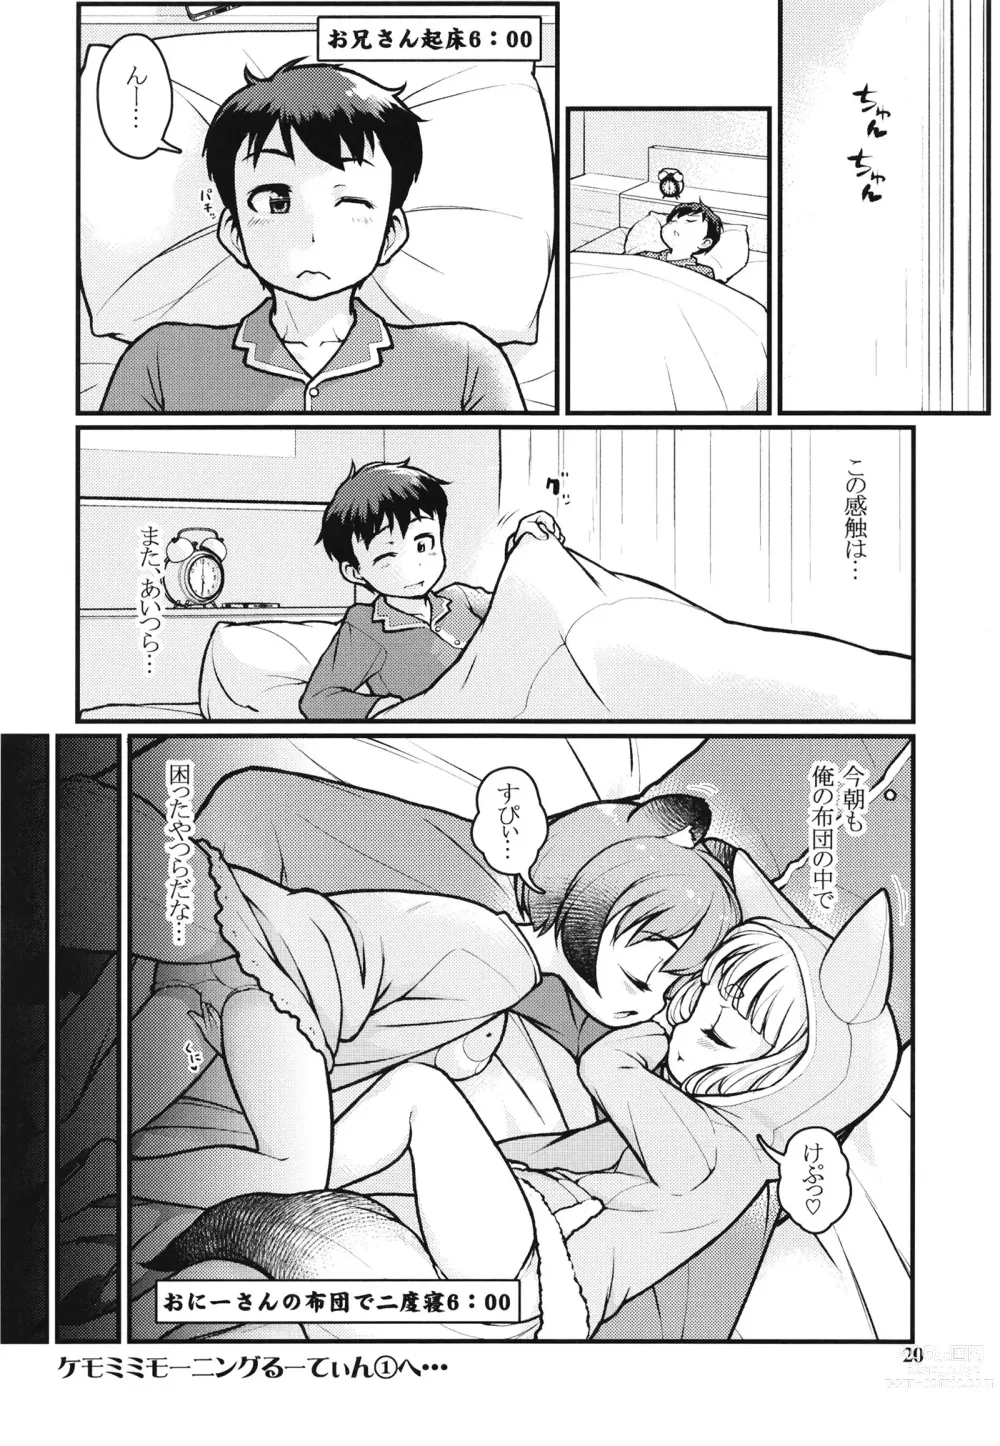 Page 19 of doujinshi KemoMimi Morning Routine 2